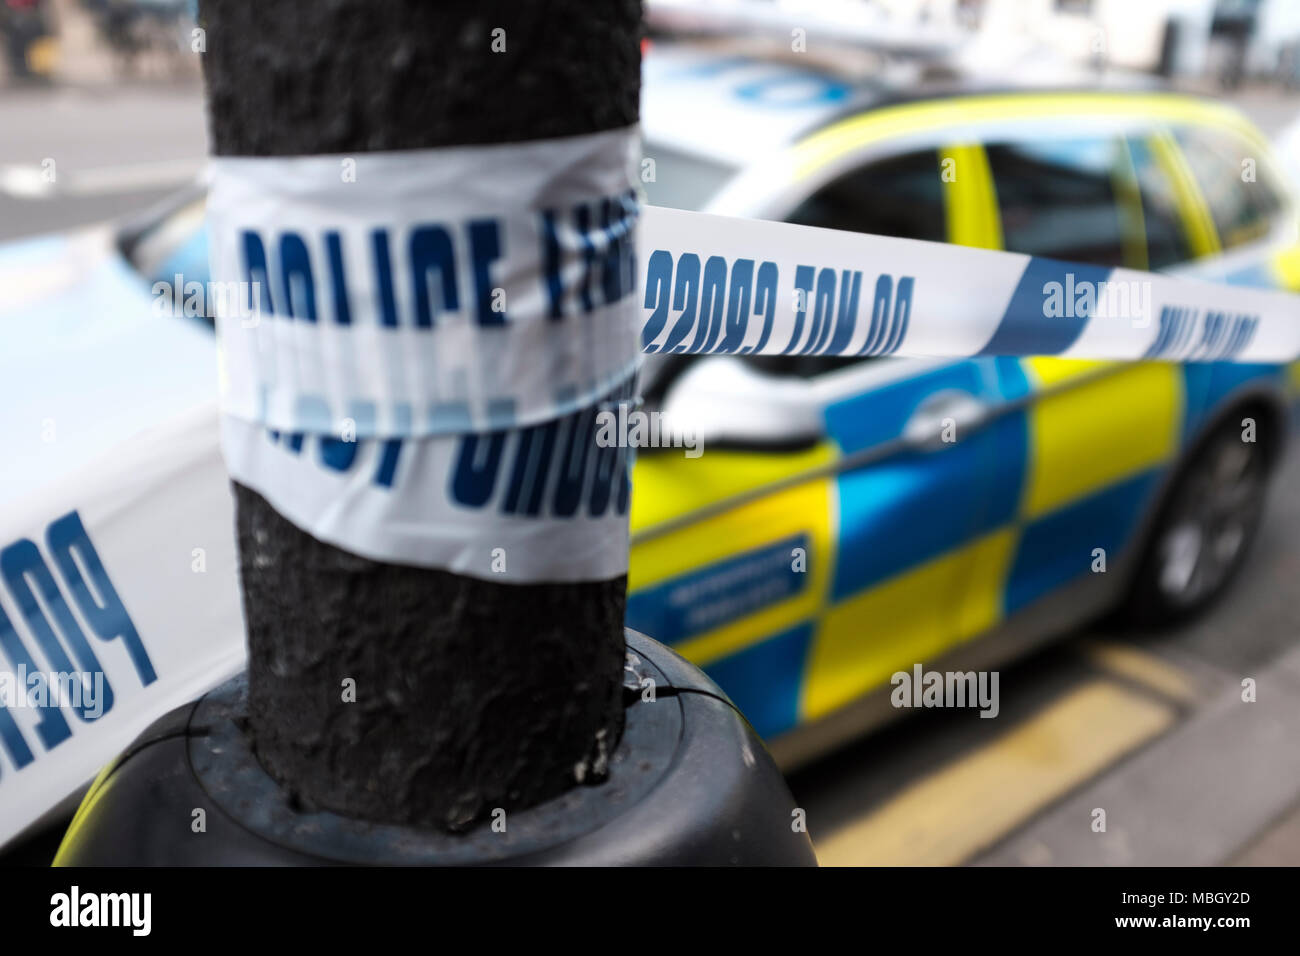 London,England-Police line, do not cross- crime scene investigation-selective focus Stock Photo